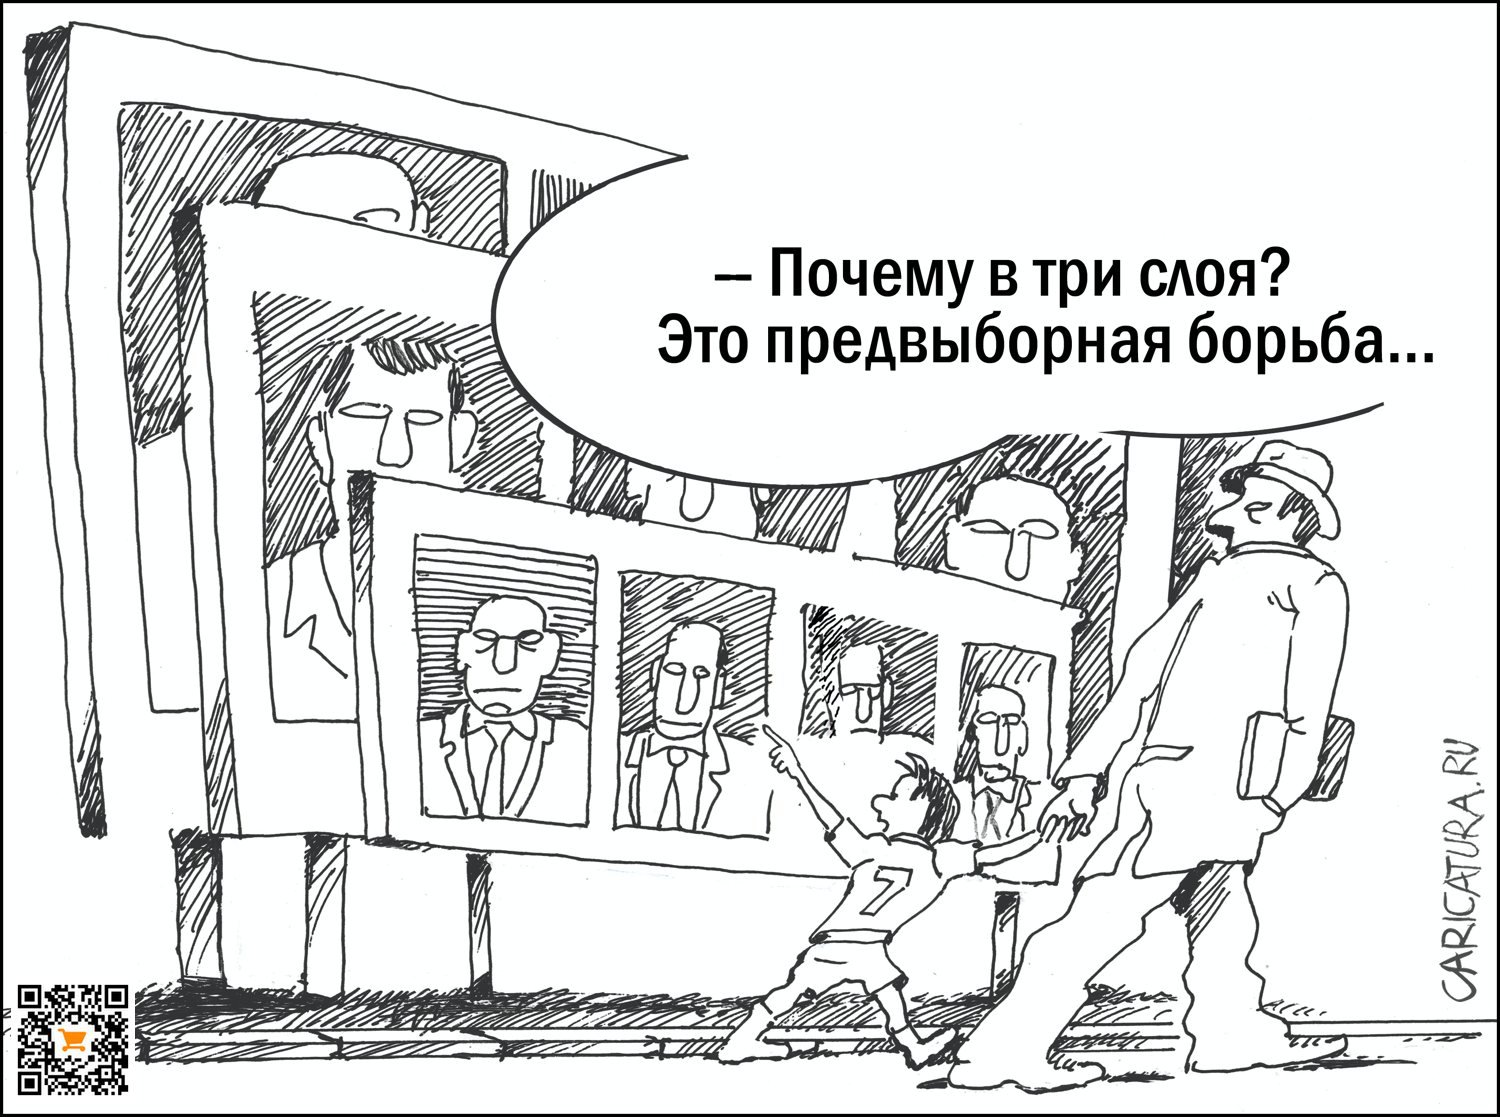 Карикатура "Предвыборная борьба", Александр Уваров